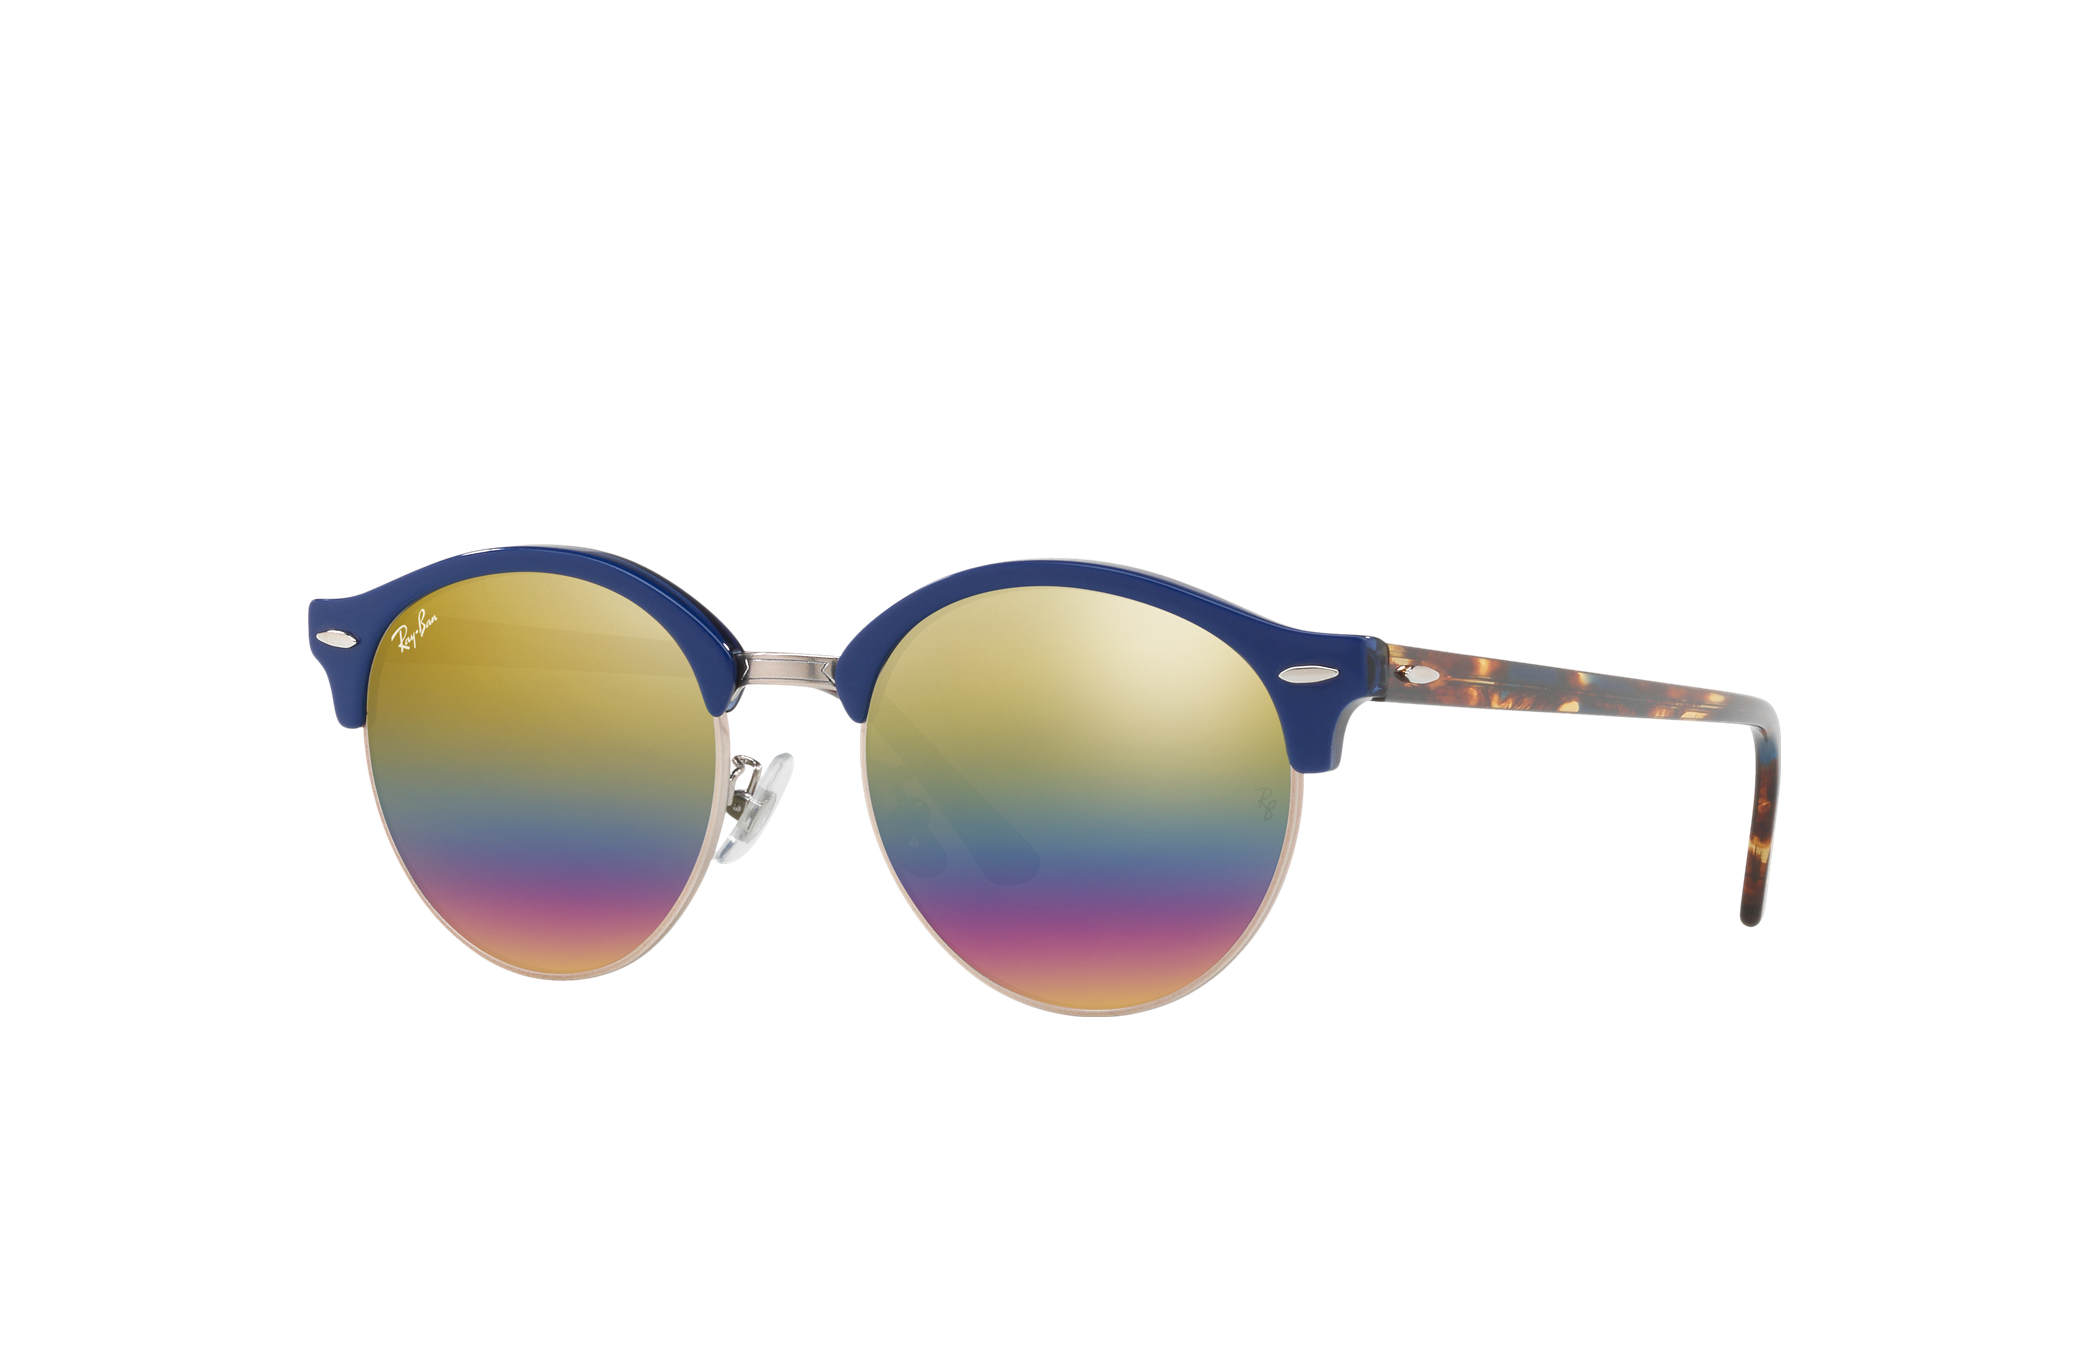 ray ban rainbow sunglasses